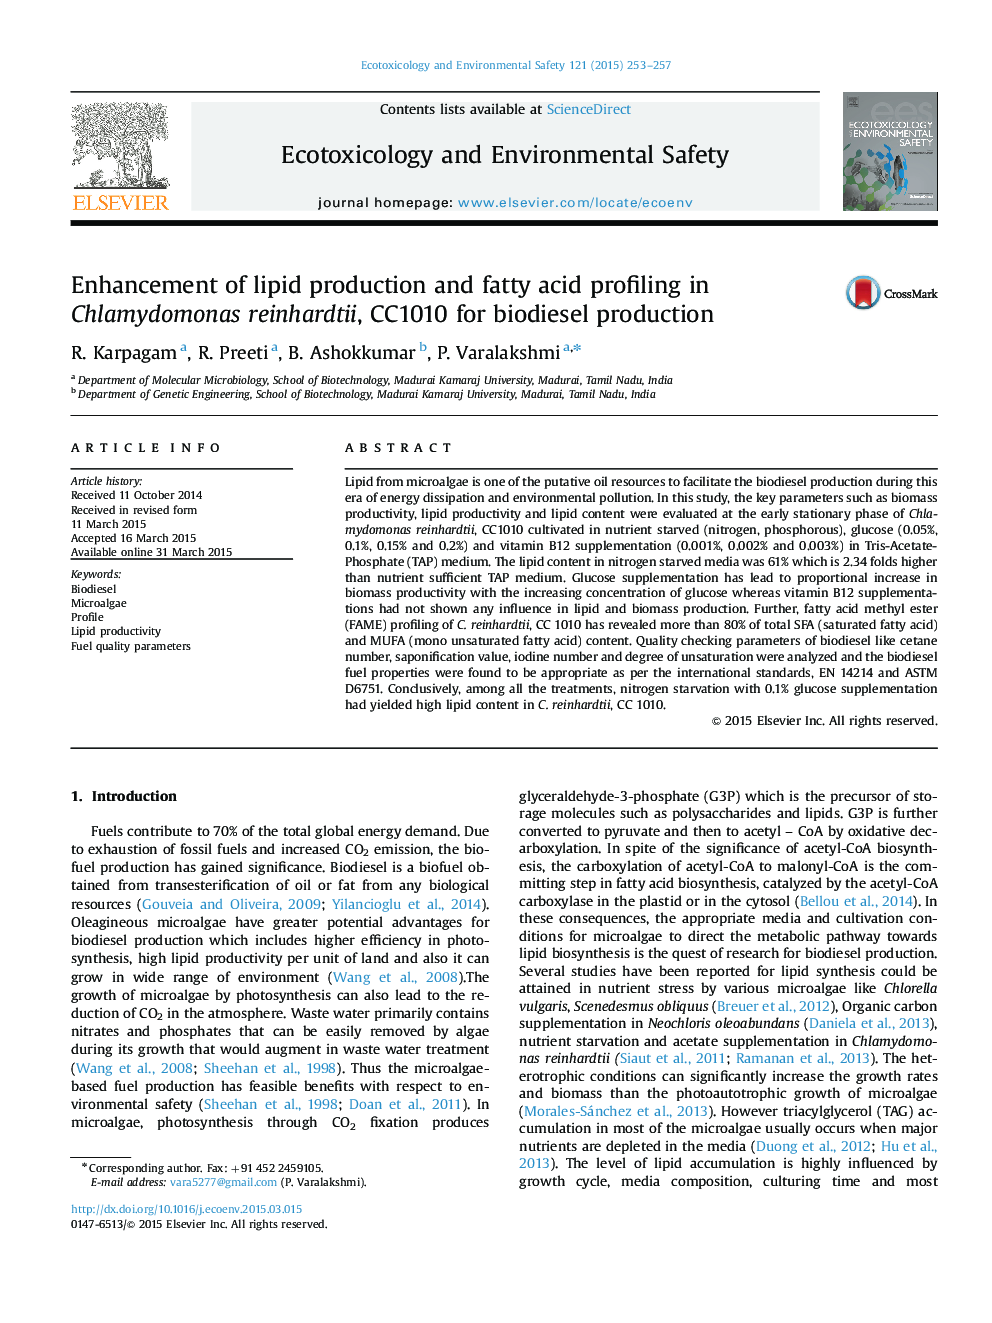 Enhancement of lipid production and fatty acid profiling in Chlamydomonas reinhardtii, CC1010 for biodiesel production